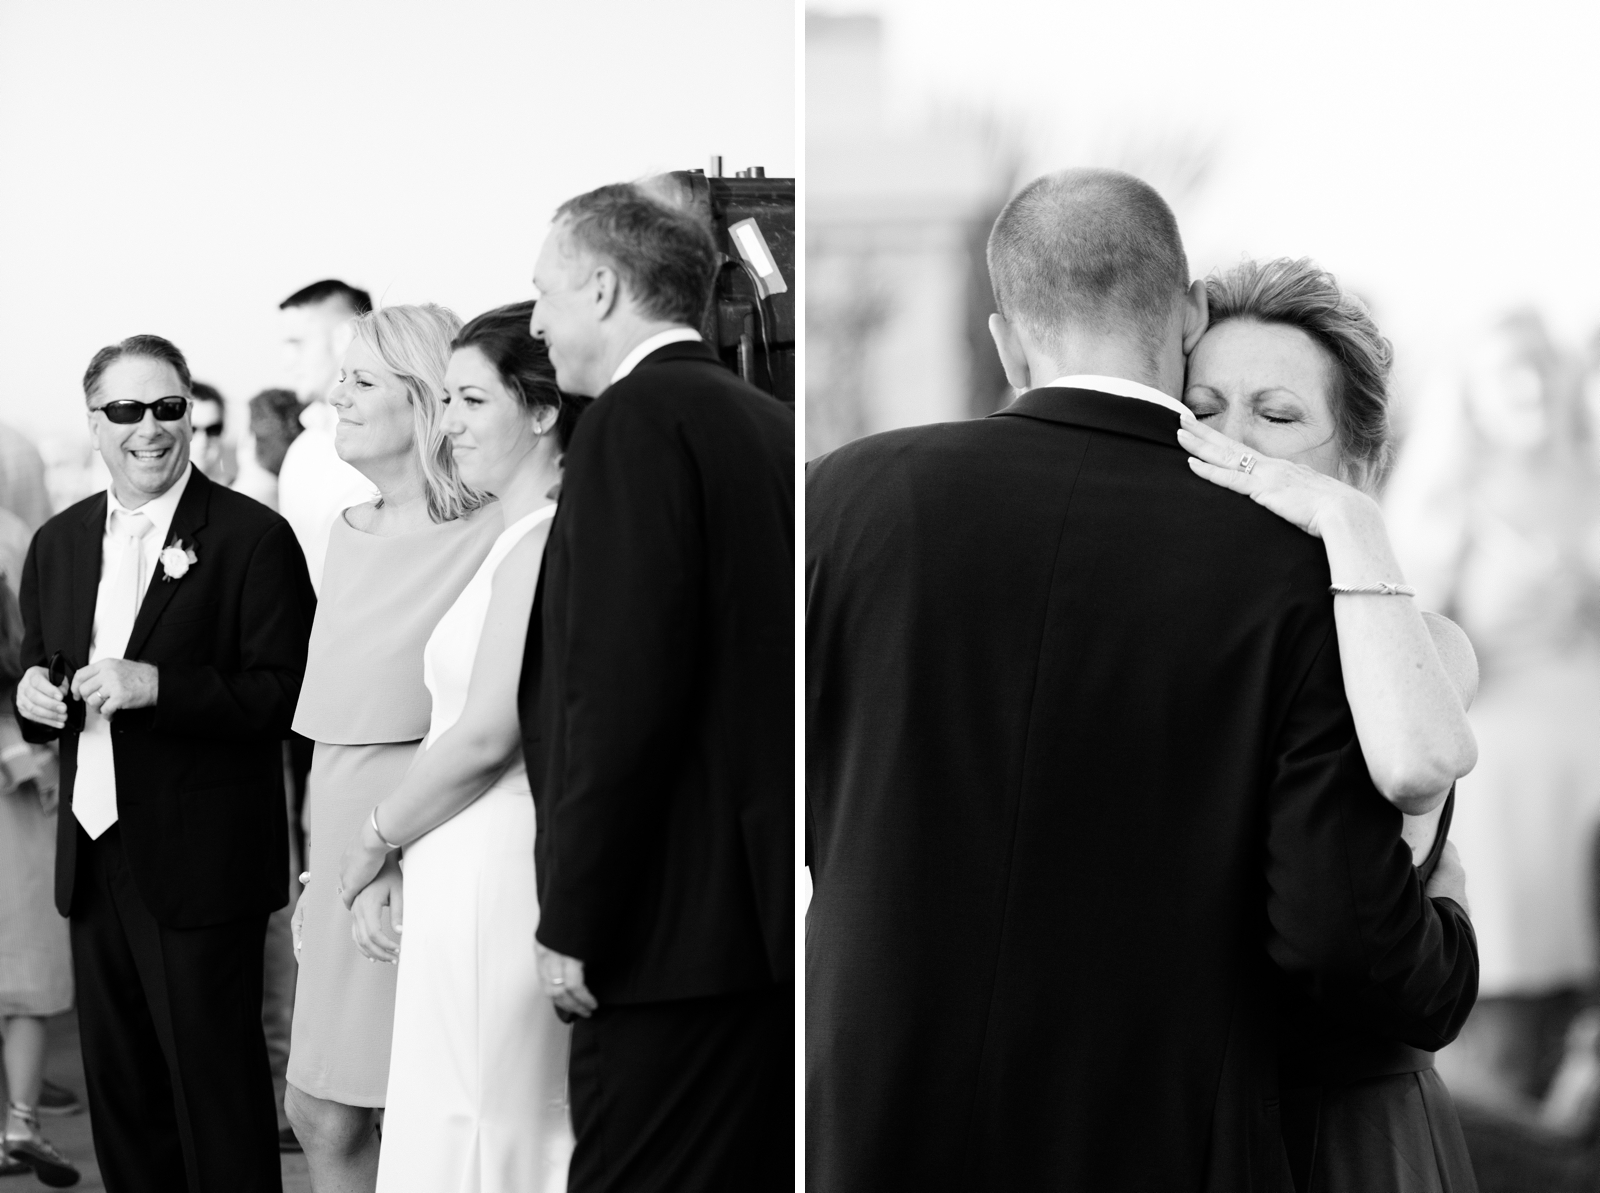 St. Augustine Wedding - Sydney Bruton Photography